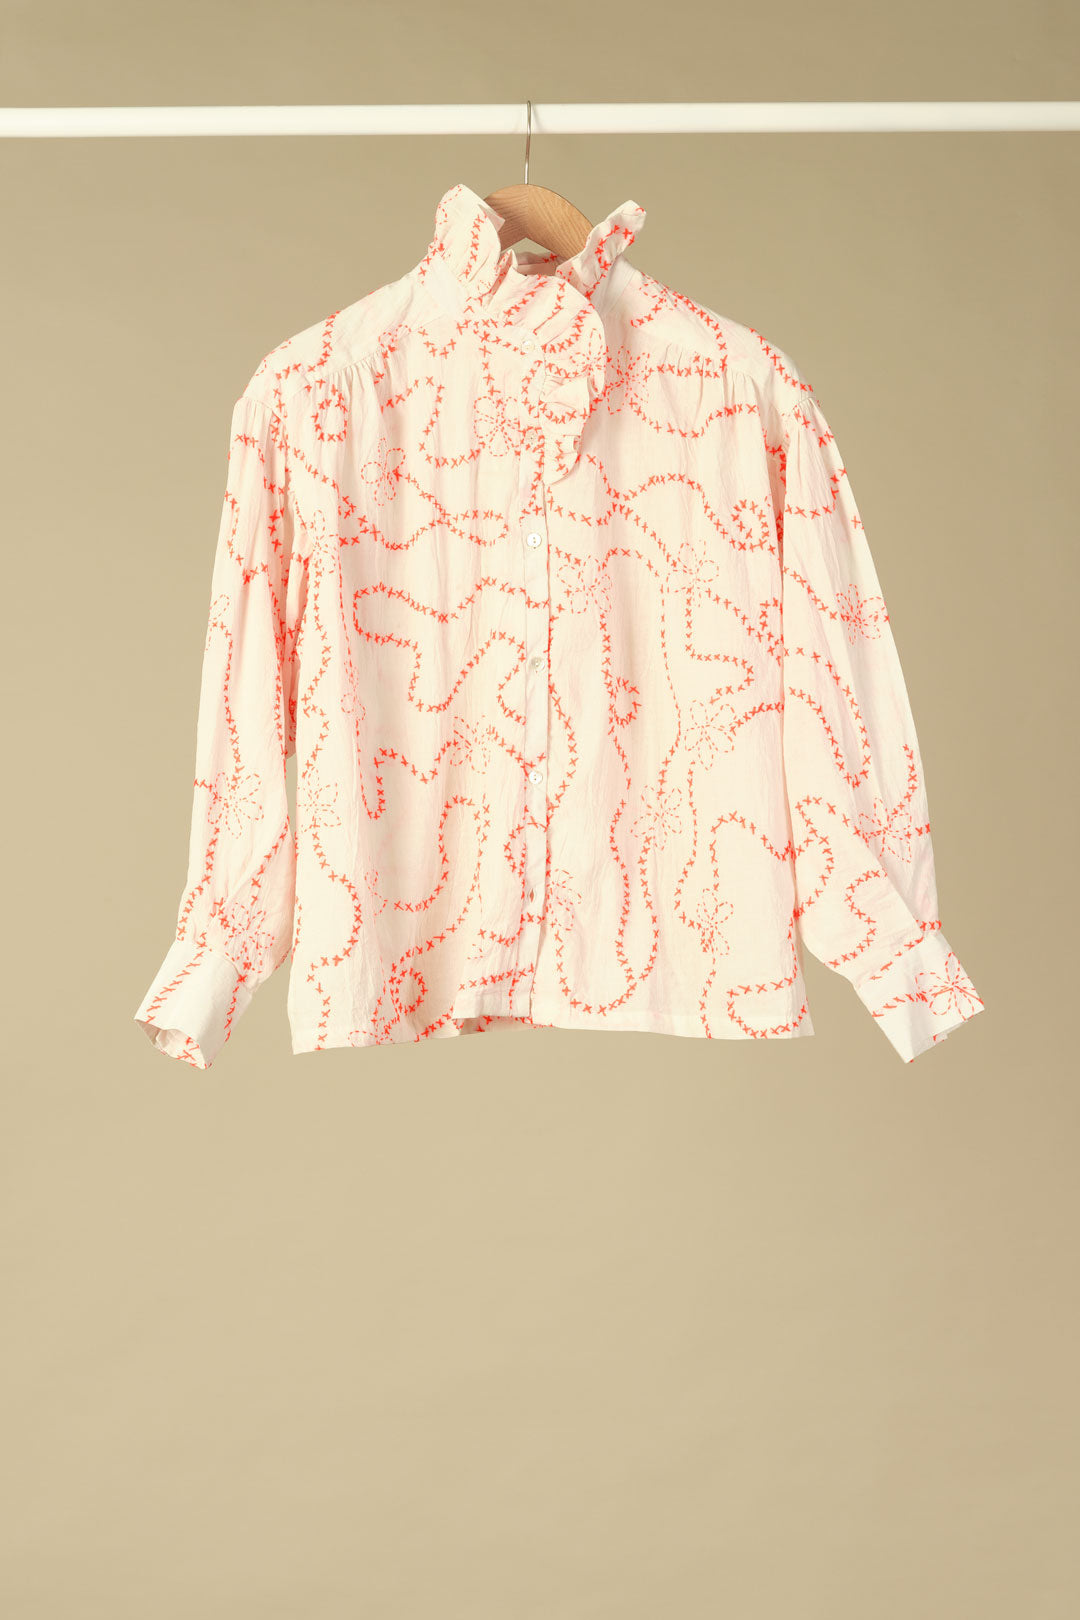 Claudia blouse - orange embroidery